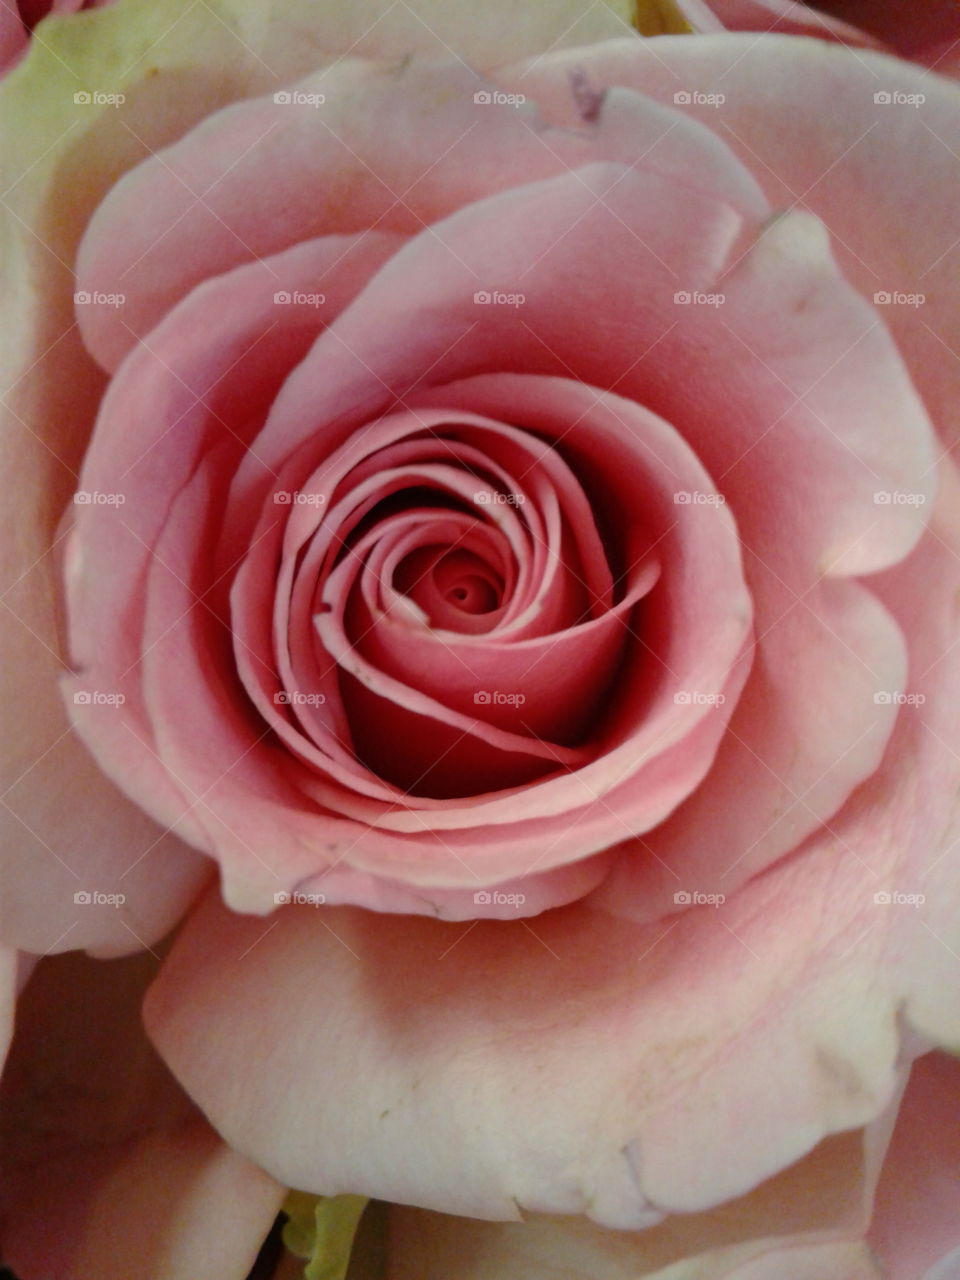 internal rose spiral